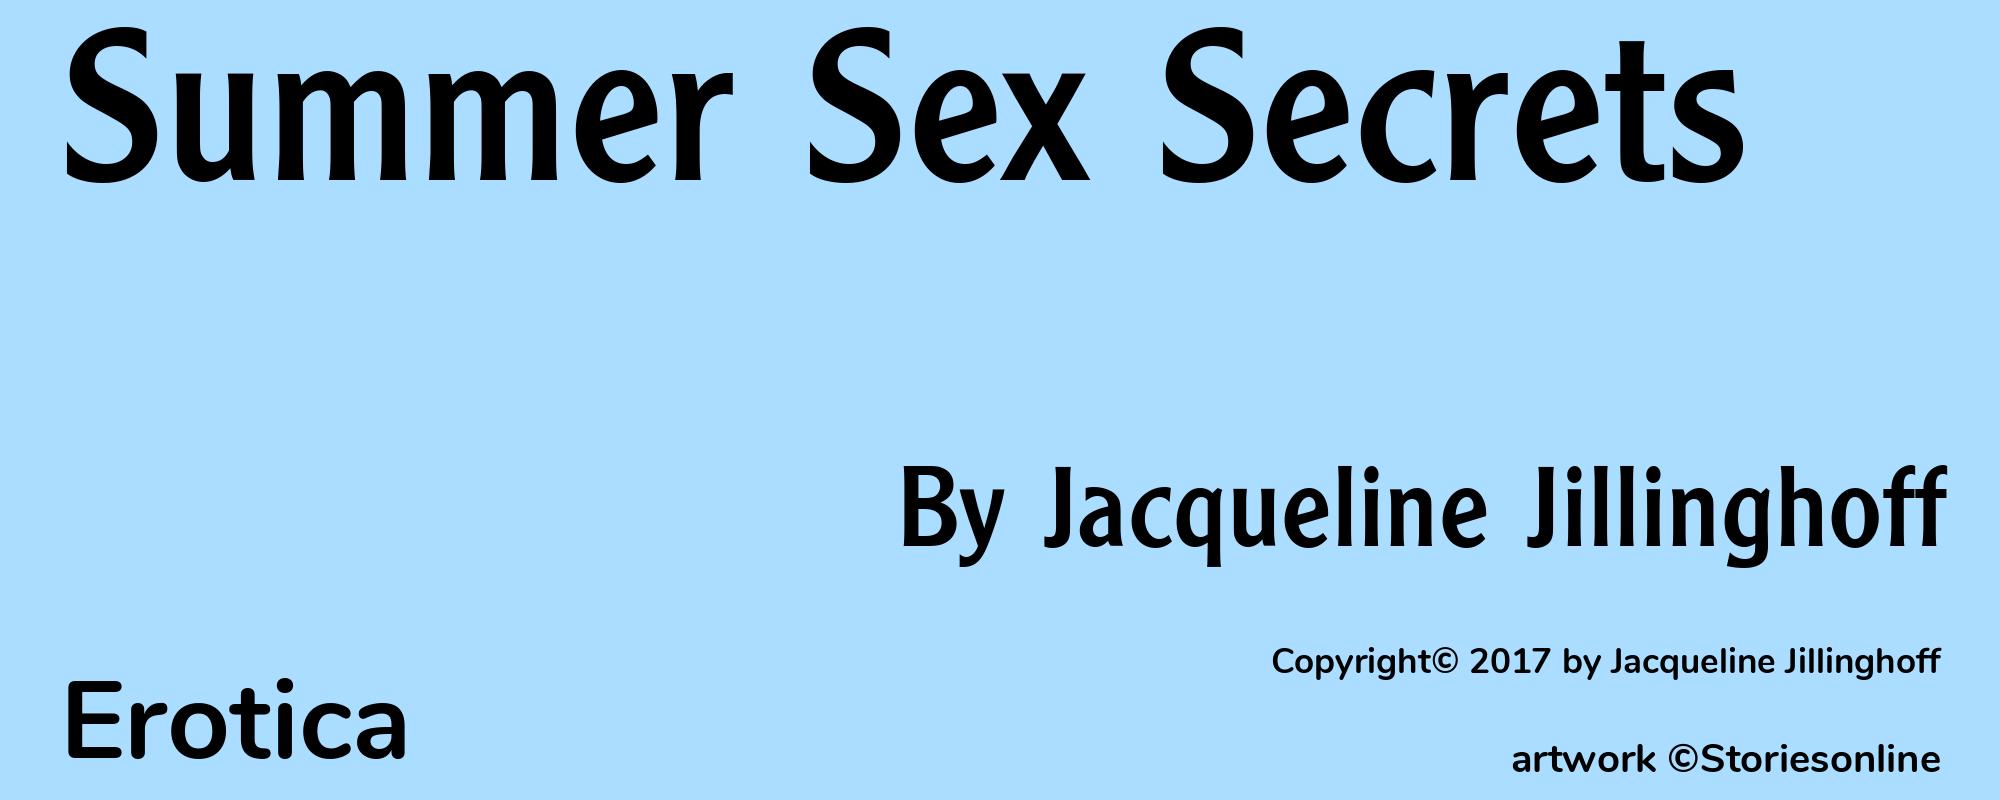 Summer Sex Secrets - Cover